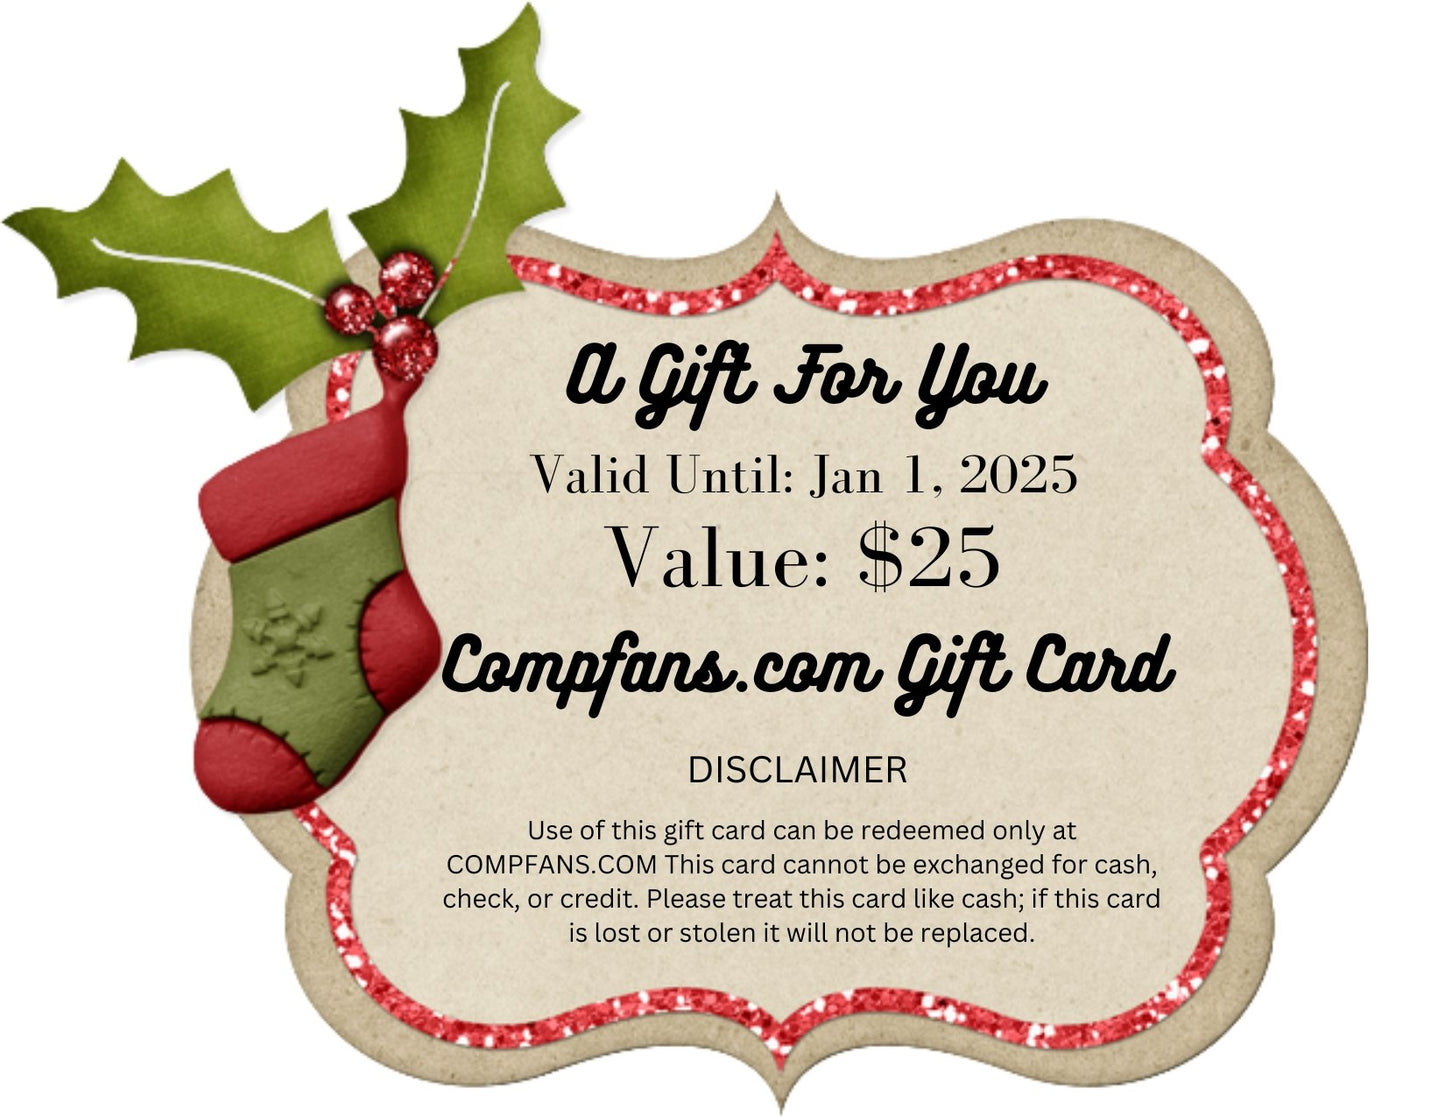 Compfans.com - Gift Card - Compfans.com